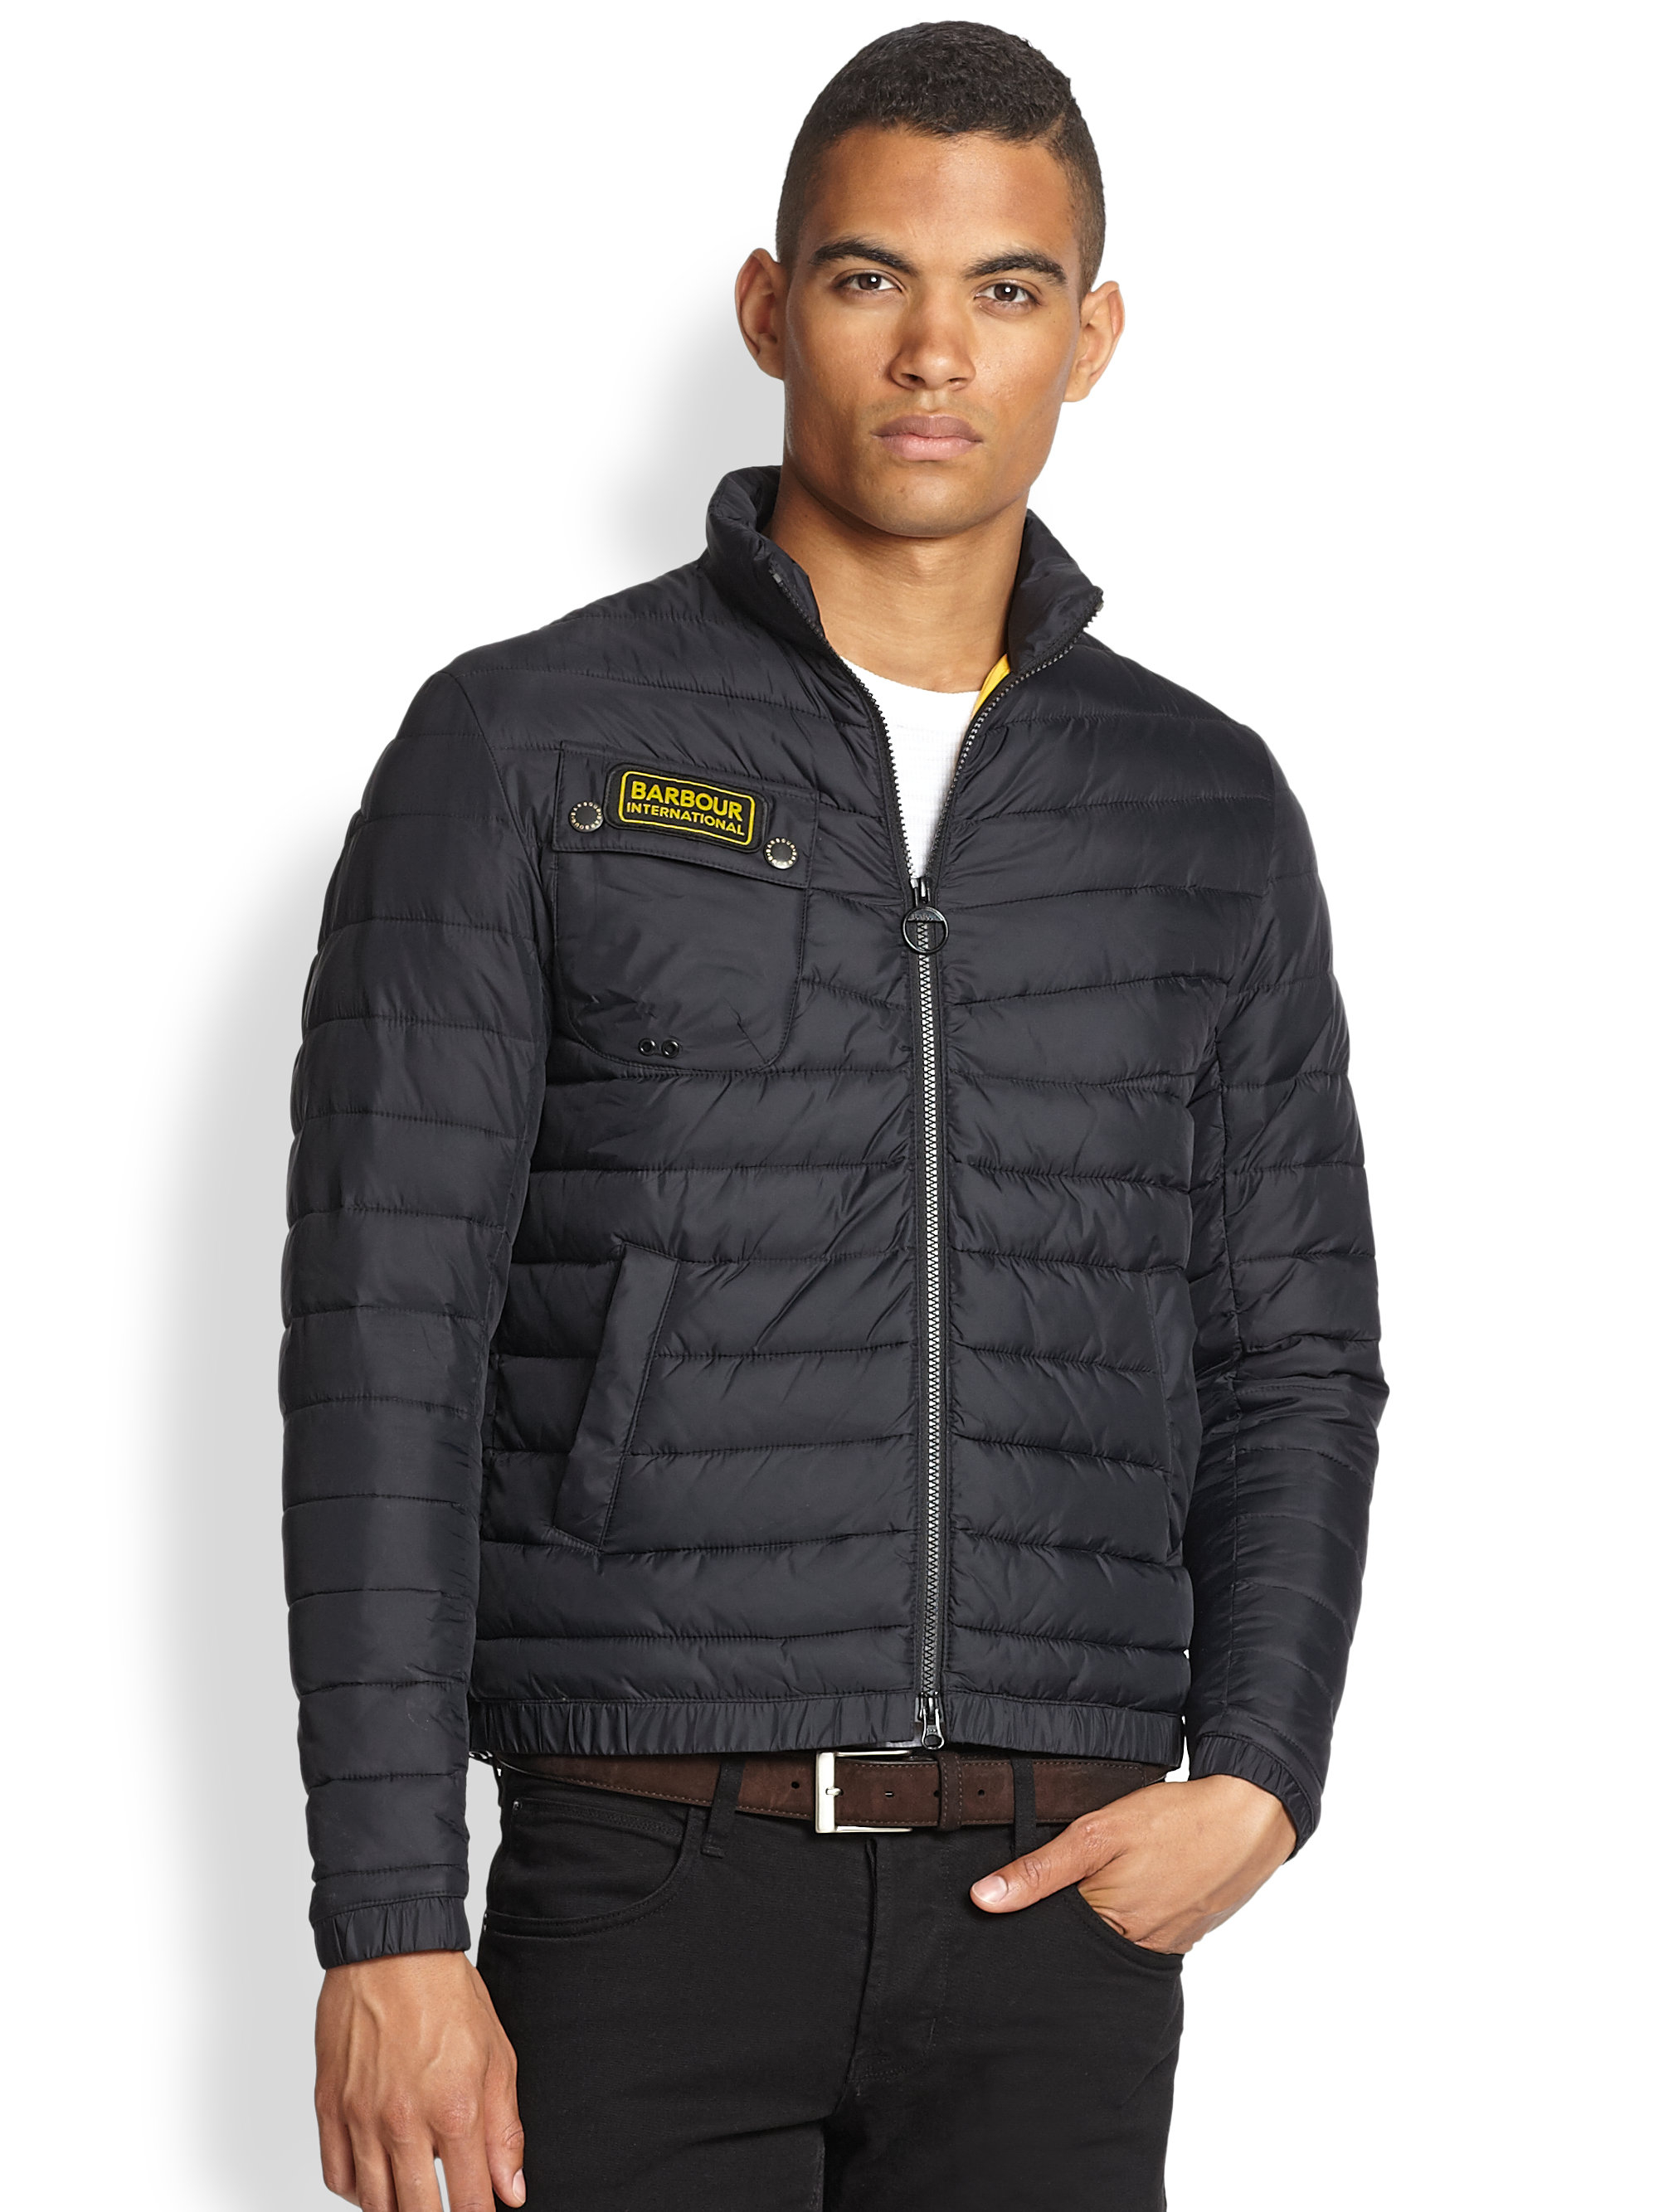 Lyst - Barbour Chain International Puffer Jacket in Black for Men